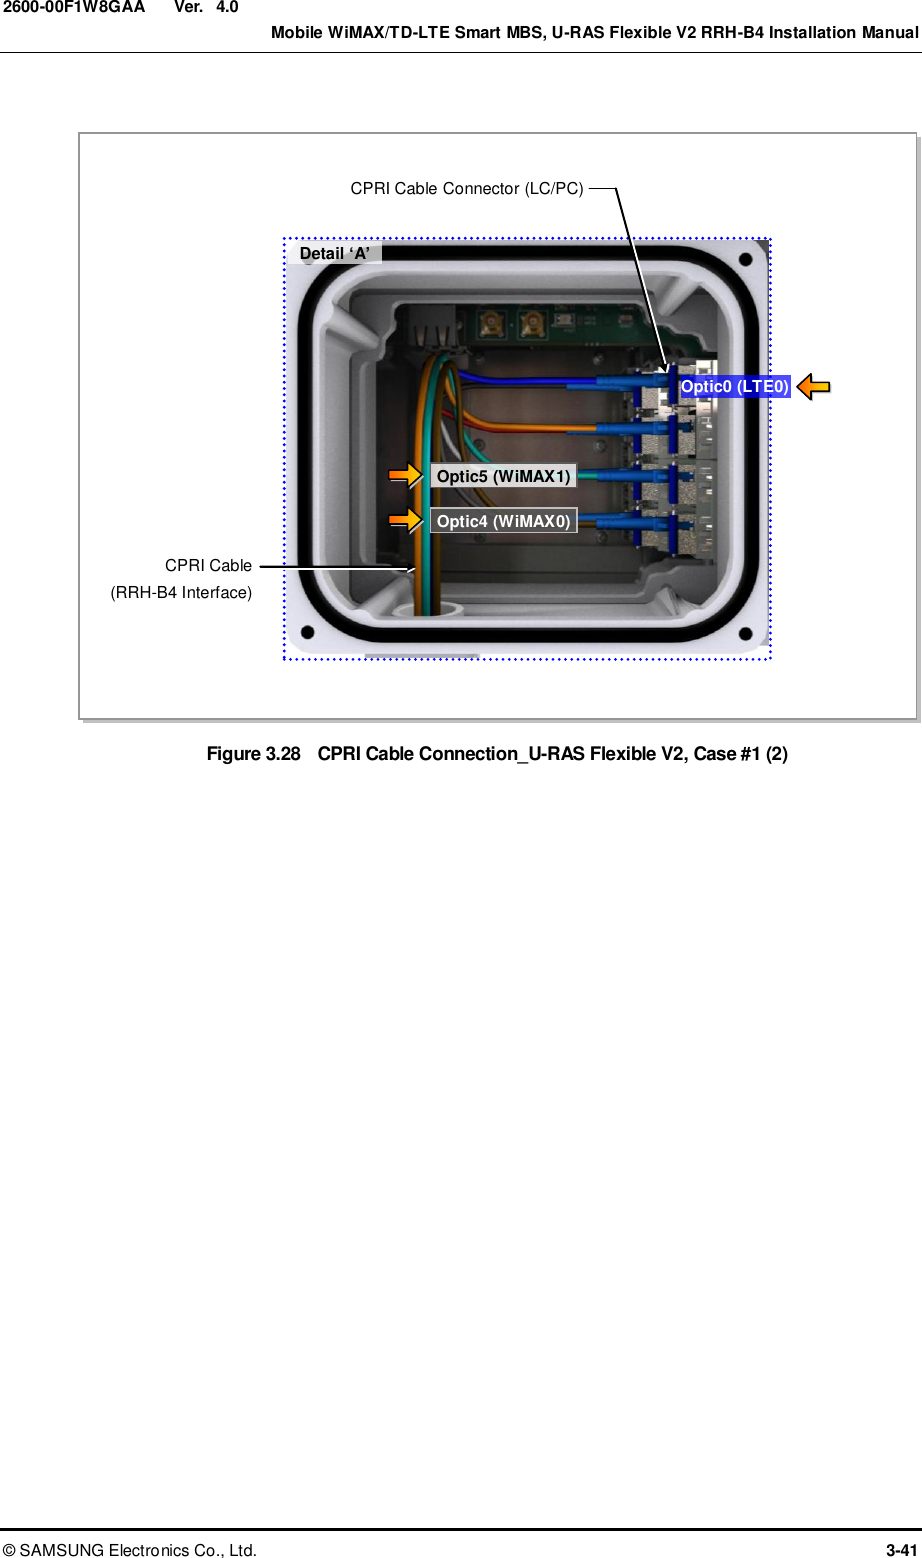  Ver.    Mobile WiMAX/TD-LTE Smart MBS, U-RAS Flexible V2 RRH-B4 Installation Manual ©  SAMSUNG Electronics Co., Ltd.  3-41 2600-00F1W8GAA 4.0  Figure 3.28  CPRI Cable Connection_U-RAS Flexible V2, Case #1 (2)  Detail ‘A’ CPRI Cable (RRH-B4 Interface) CPRI Cable Connector (LC/PC) Optic0 (LTE0) Optic4 (WiMAX0) Optic5 (WiMAX1) 